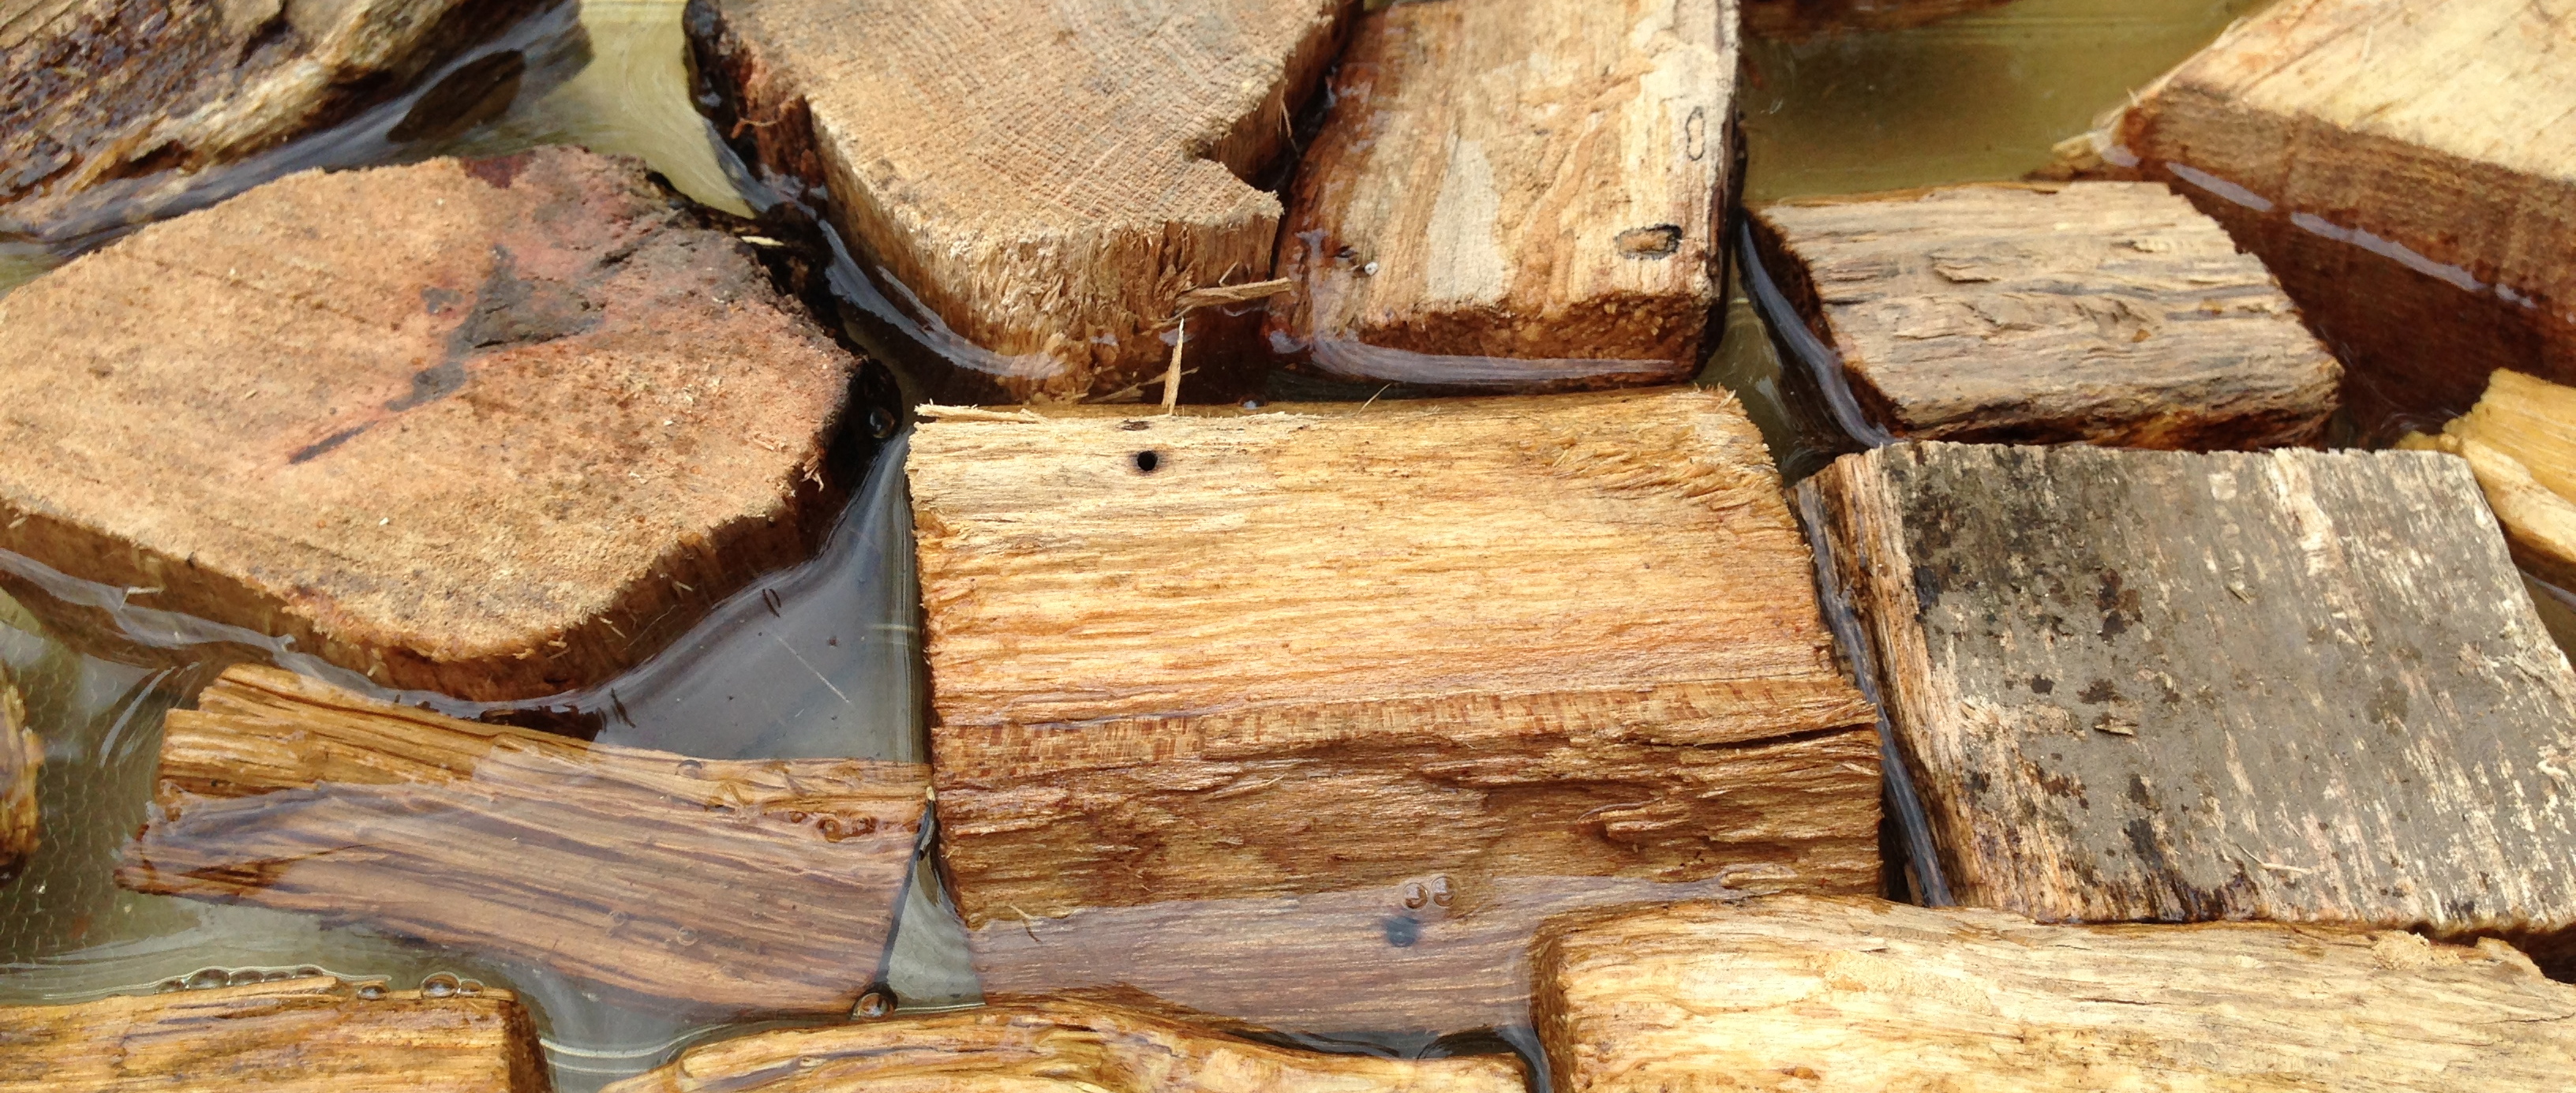 http://texasovenco.com/wp-content/uploads/2014/04/soak-wood-wood-burning-pizza-oven-smoker.jpg